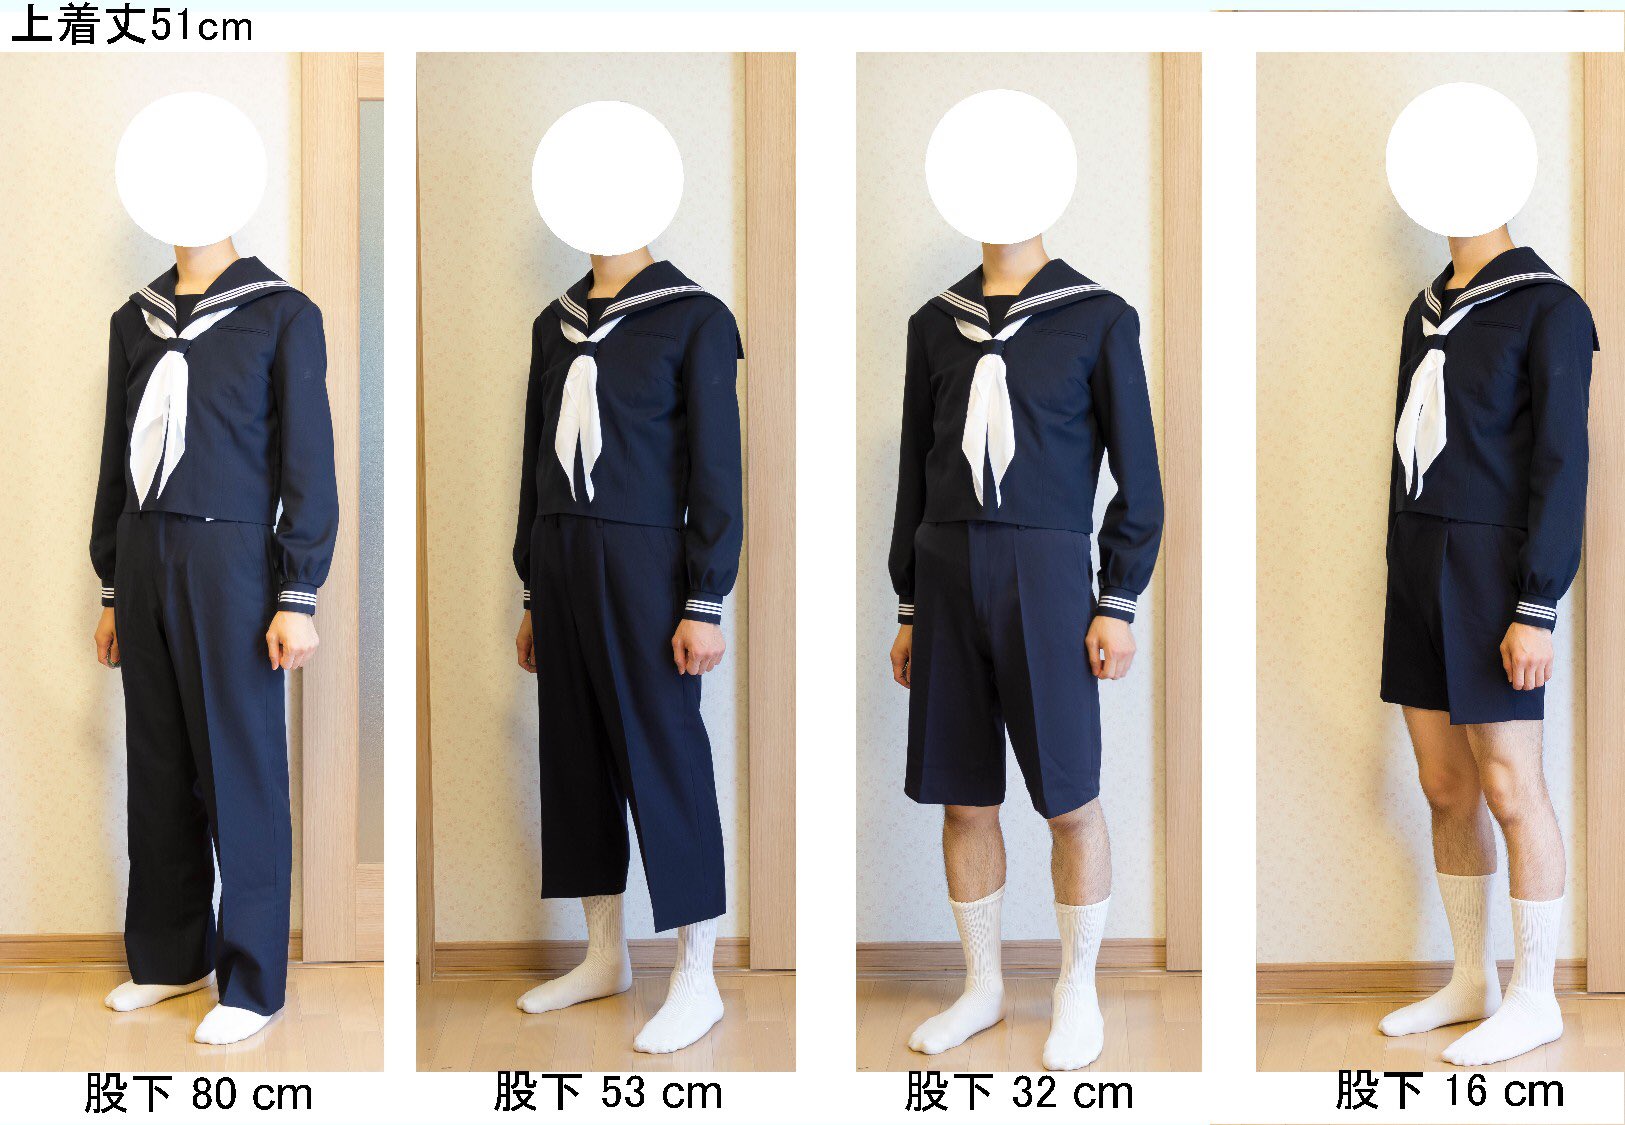 Lussapedersen Su Twitter 【研究】男子は胴長なので、セーラー服の上衣は長めの方が安定した印象になります。着丈51は 